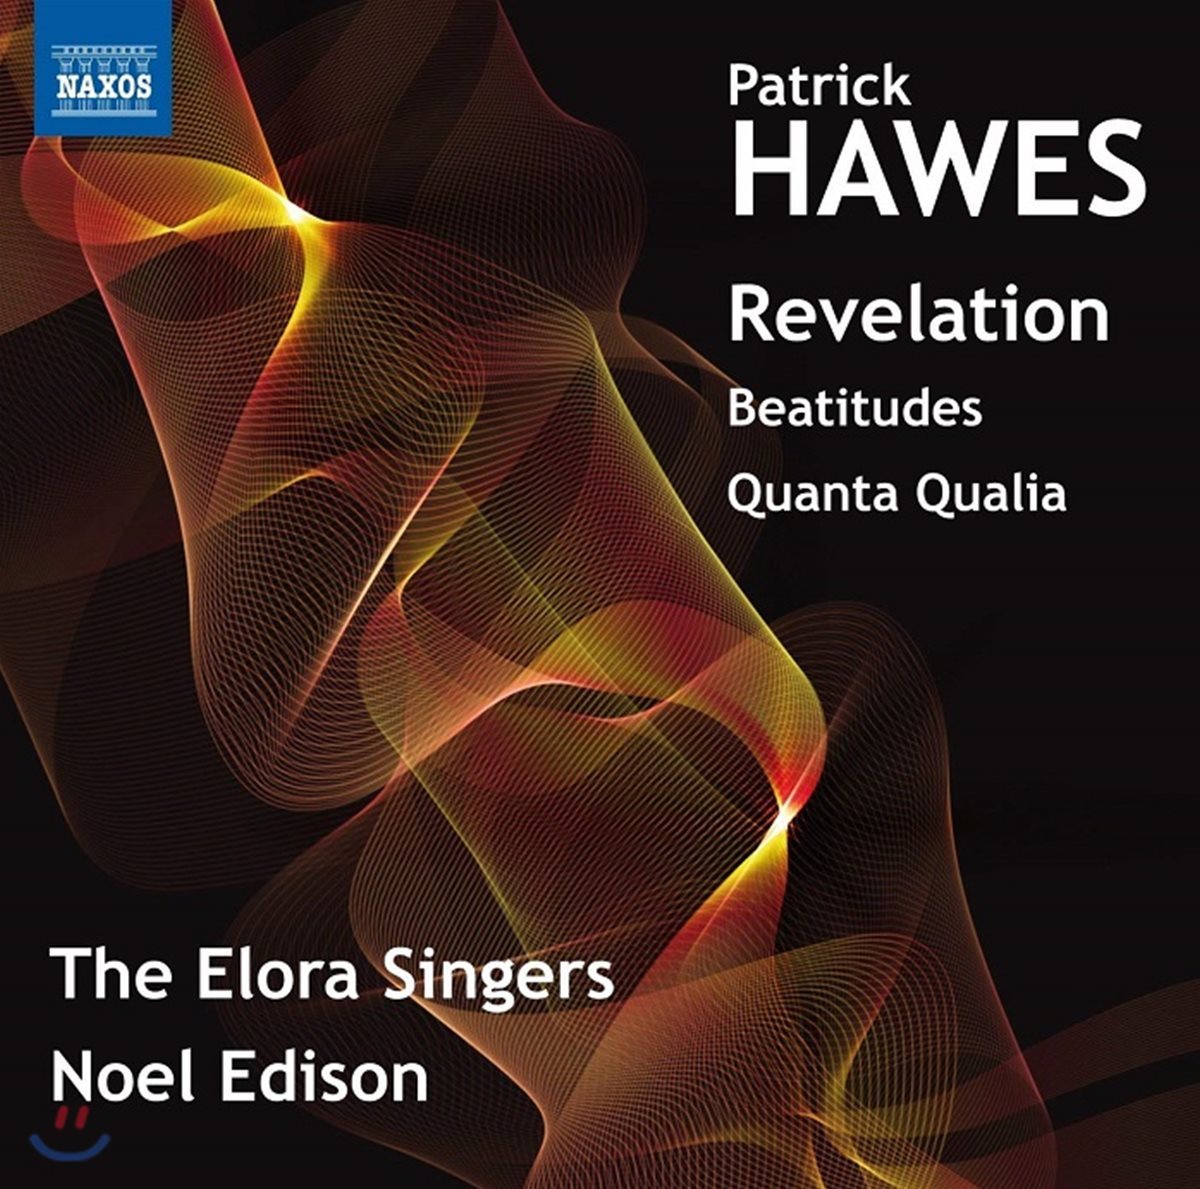 The Elora Singers / Noel Edison 패트릭 호우즈: 계시록, 팔복(八福) 외 (Patrick Hawes: Revelation, Beatitudes, Quanta Qualia) 엘로라 싱어즈, 노엘 에디슨